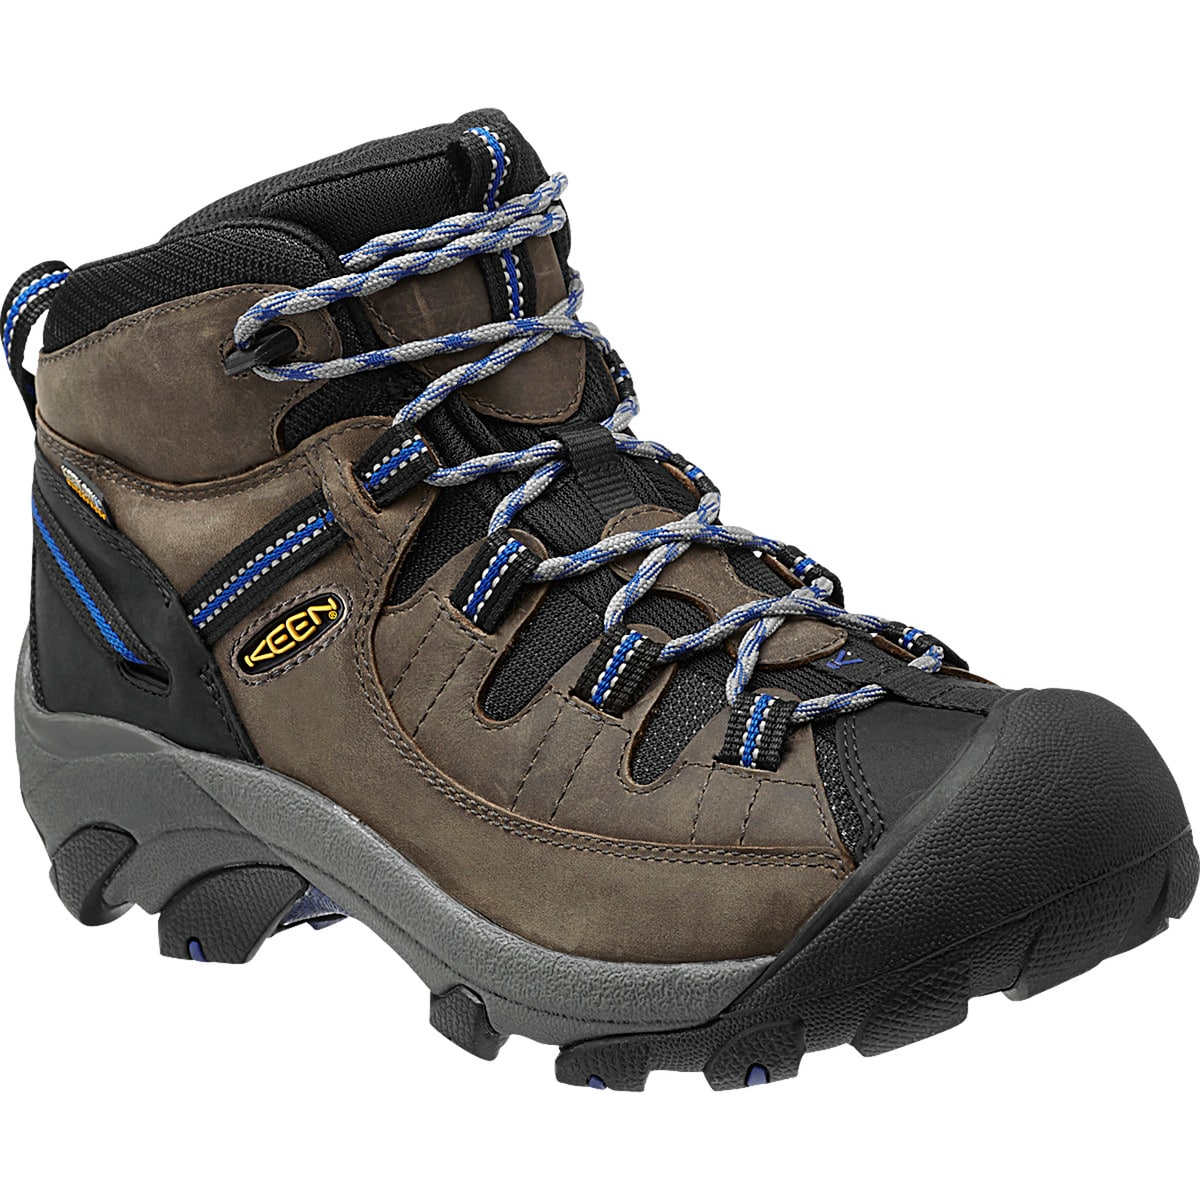 KEEN Targhee ll Mid Hiking Boot - Men's | eBay